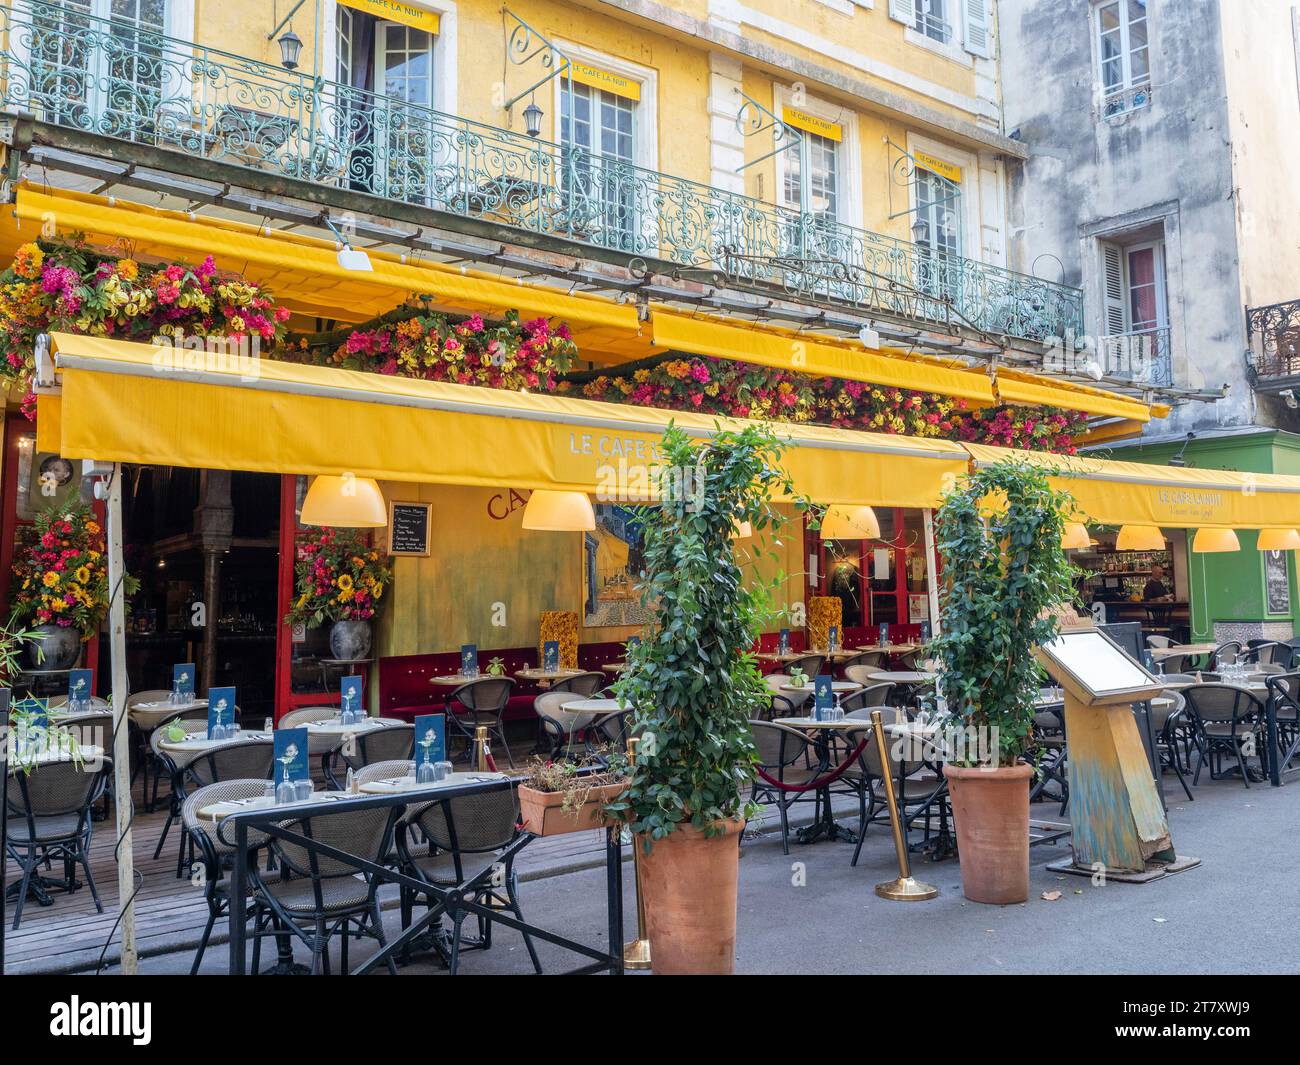 Cafe van Gogh, Place du Forum, Arles, Provence, France, Europe Stock Photo